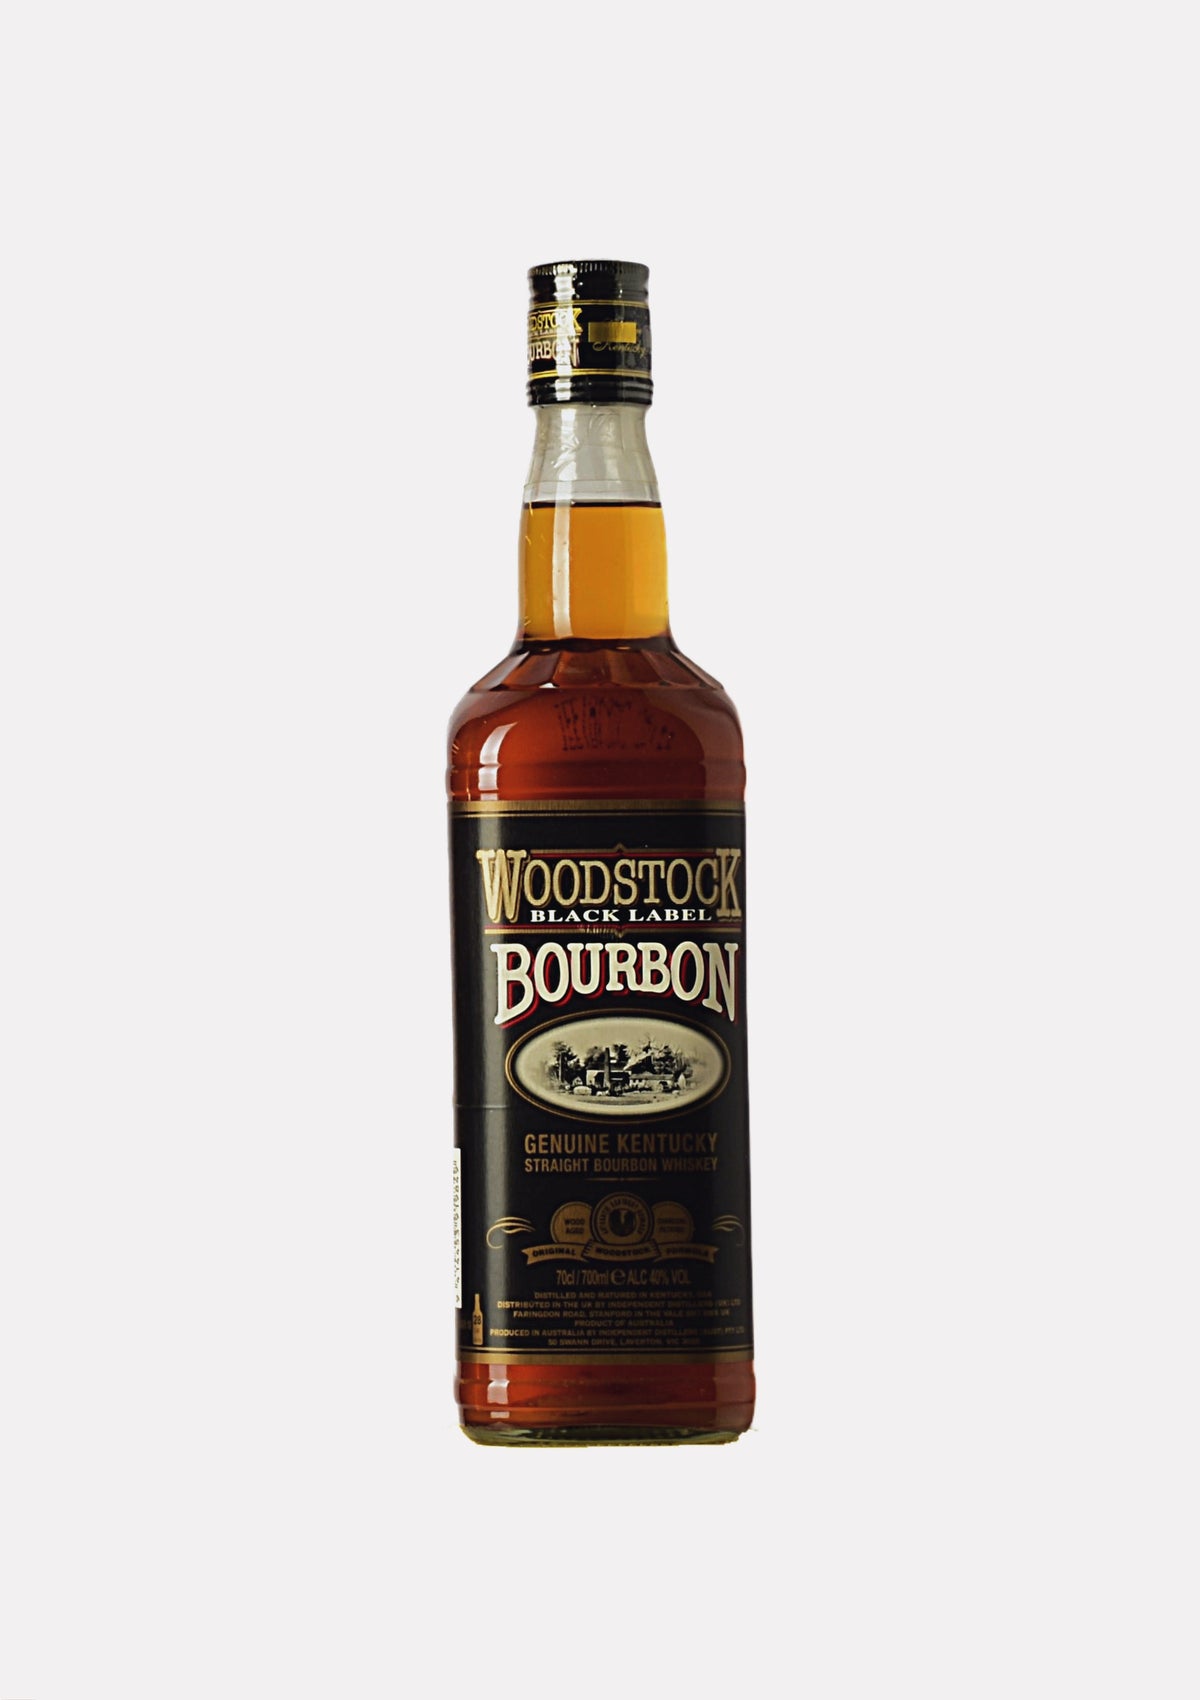 Woodstock Black Label Bourbon